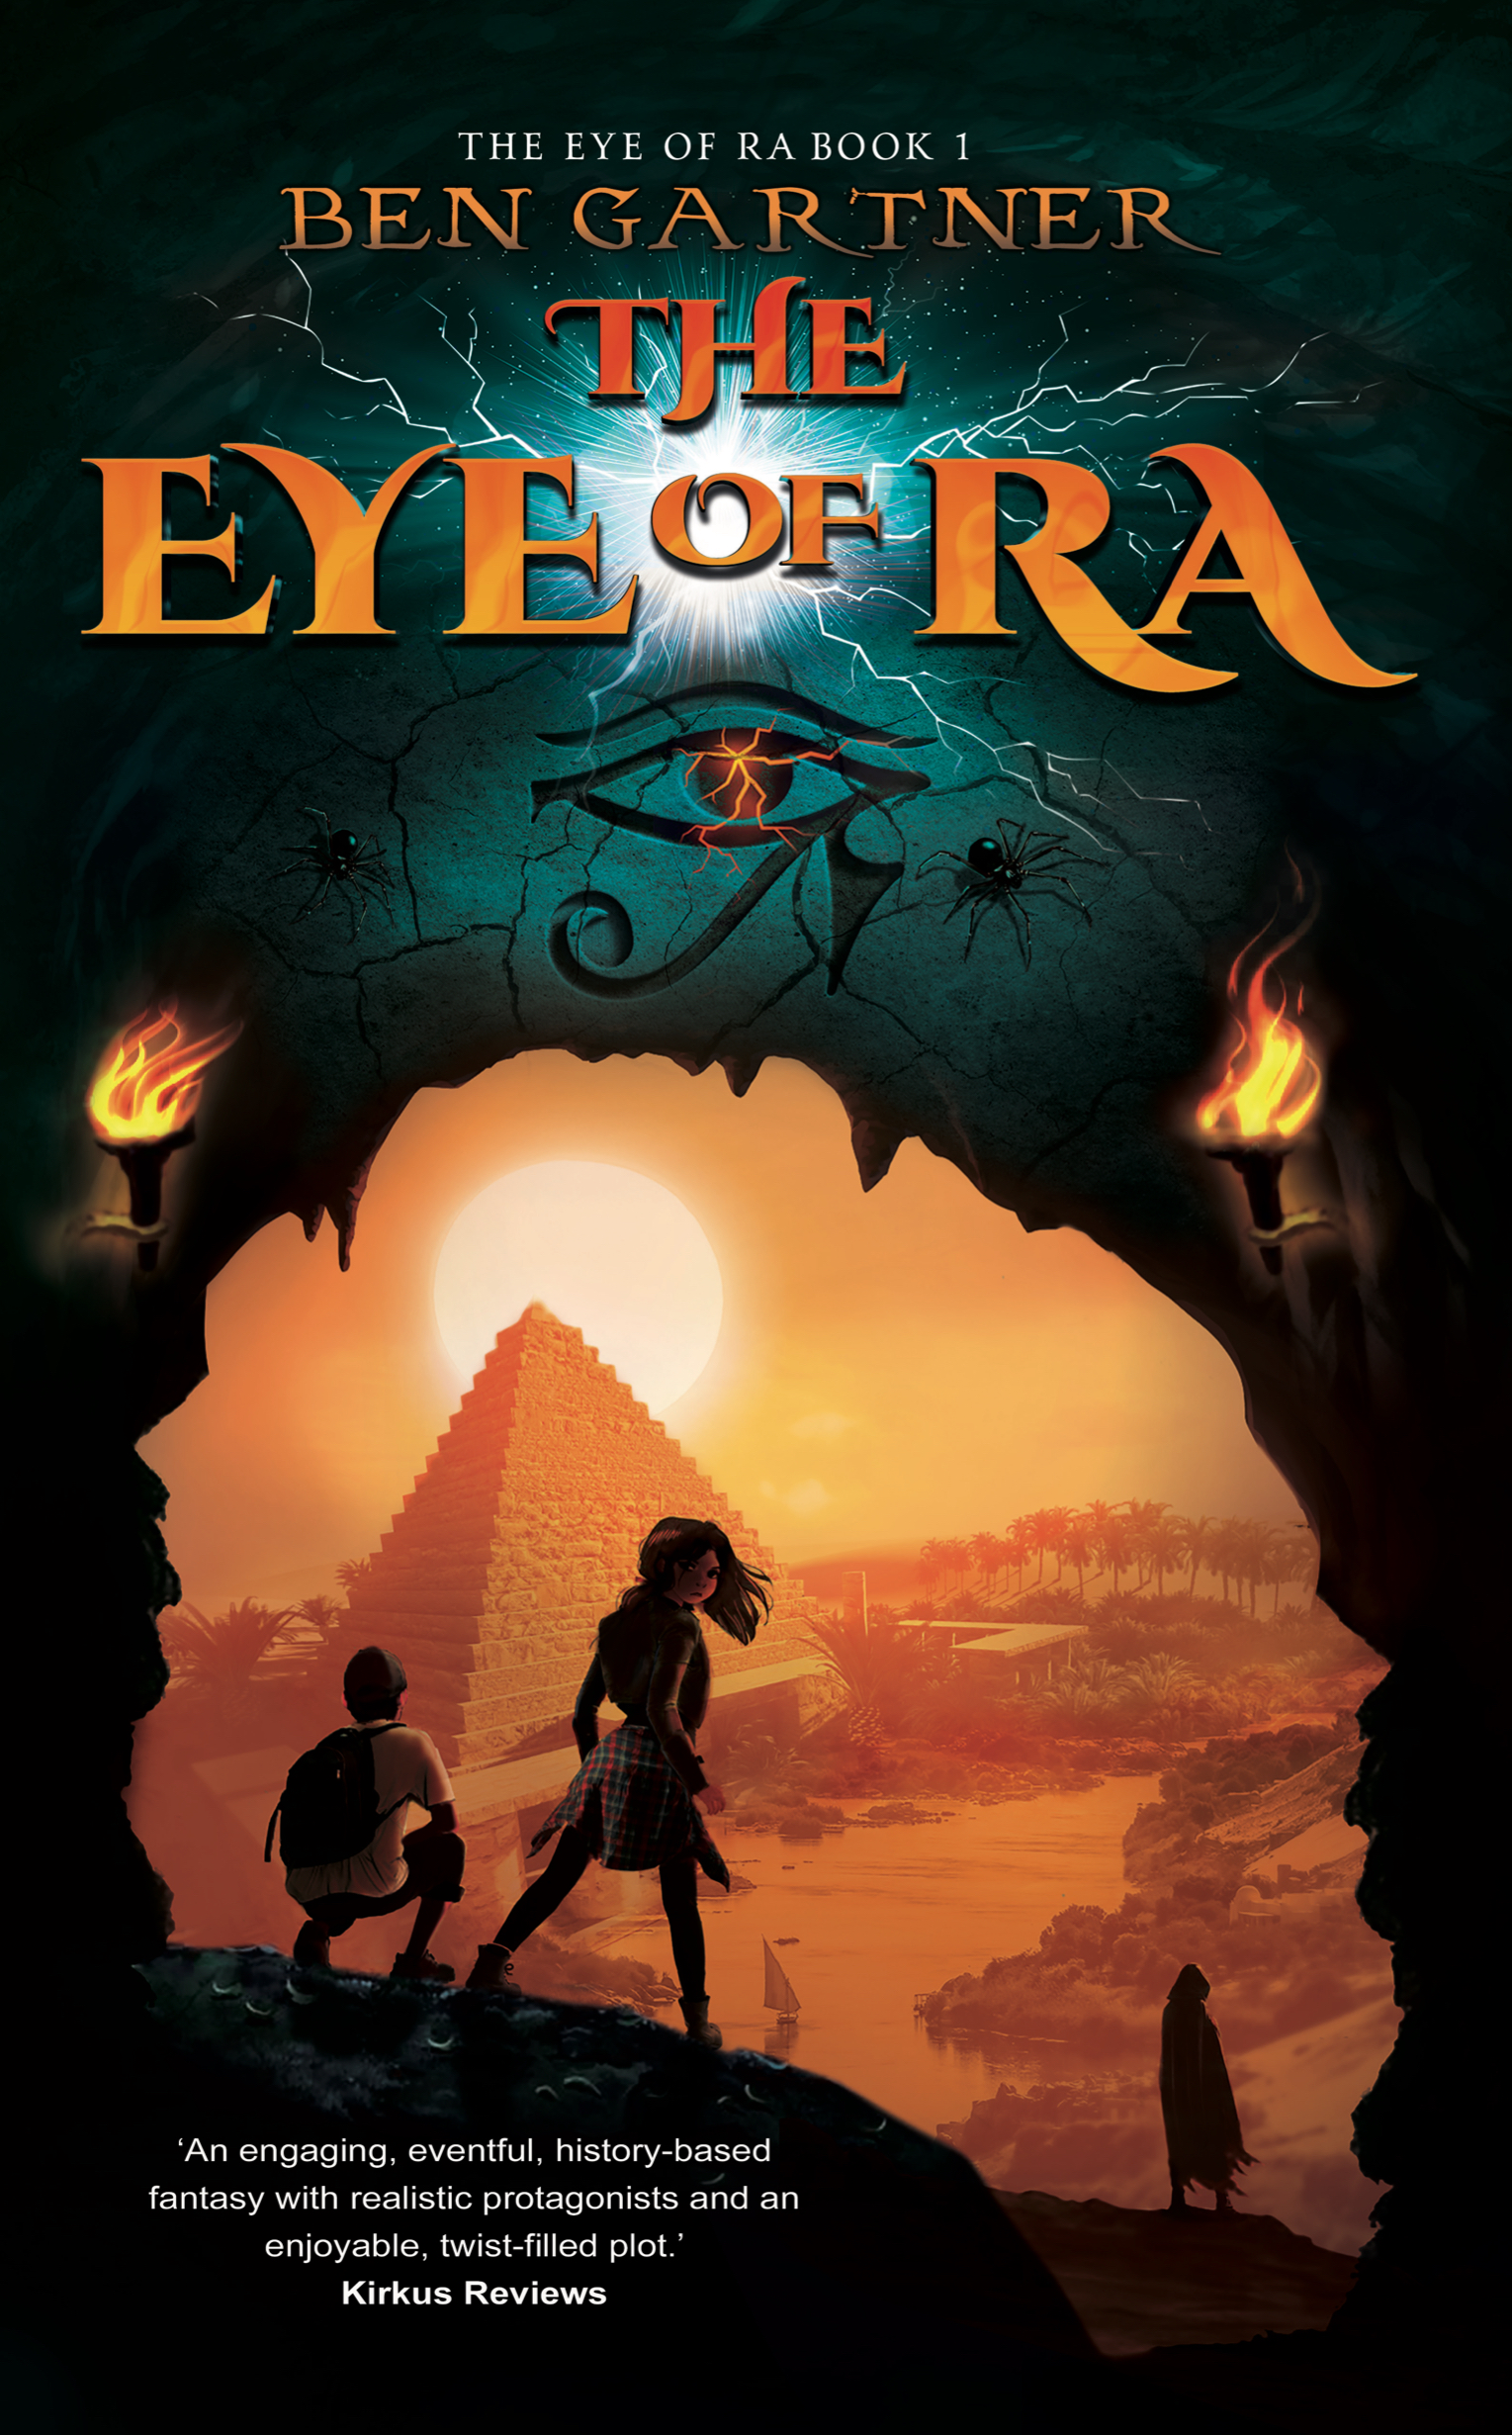 FREE: The Eye of Ra by Ben Gartner